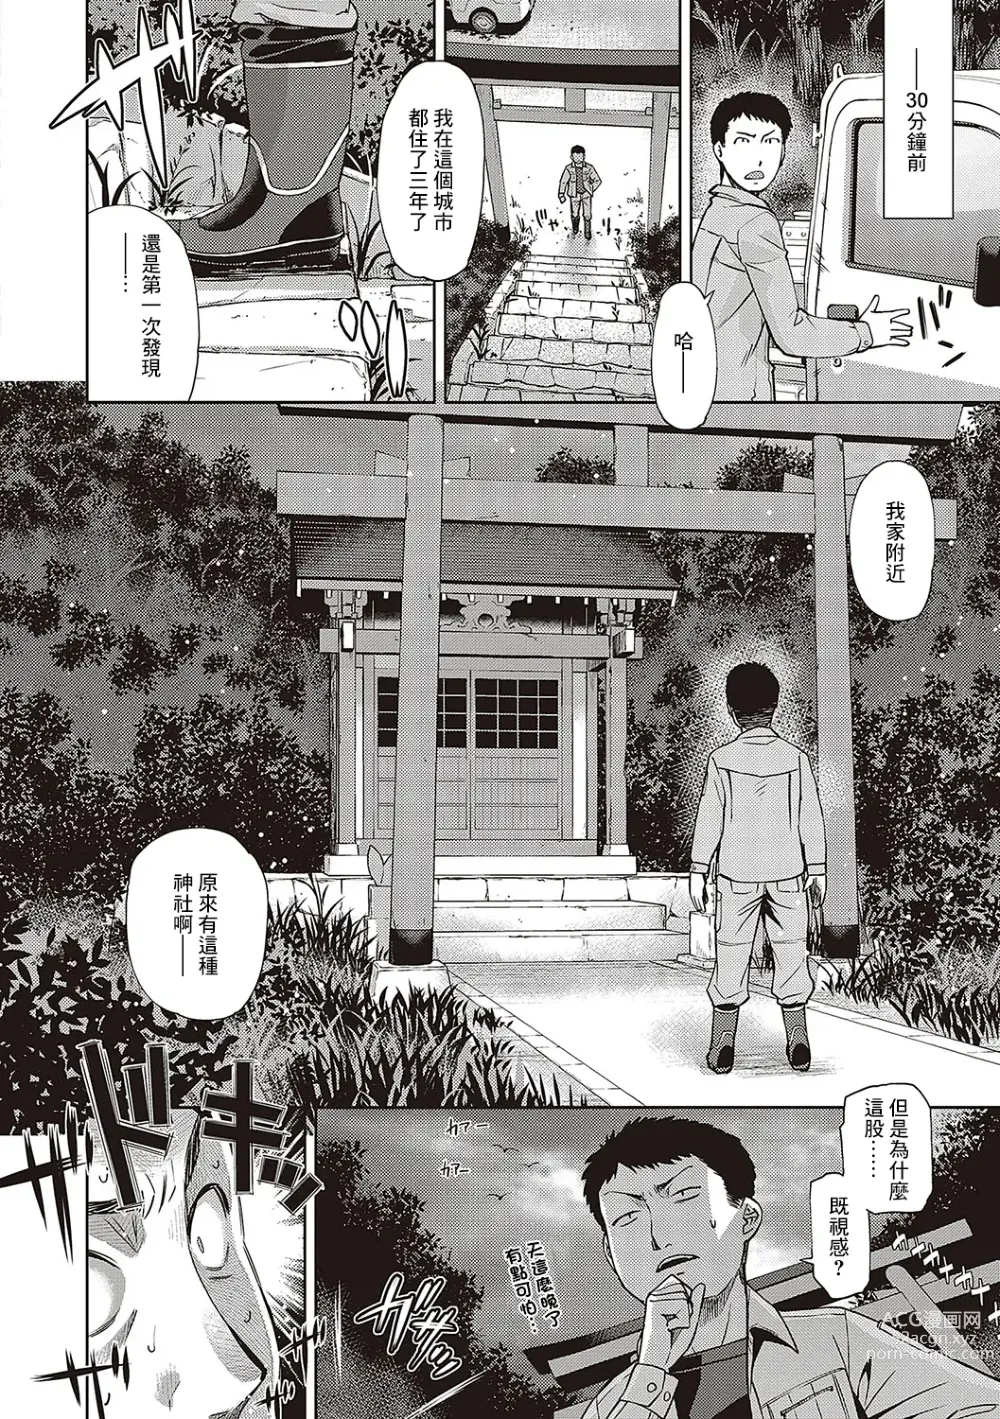 Page 2 of manga Mateba Megane no Kitsune Ari